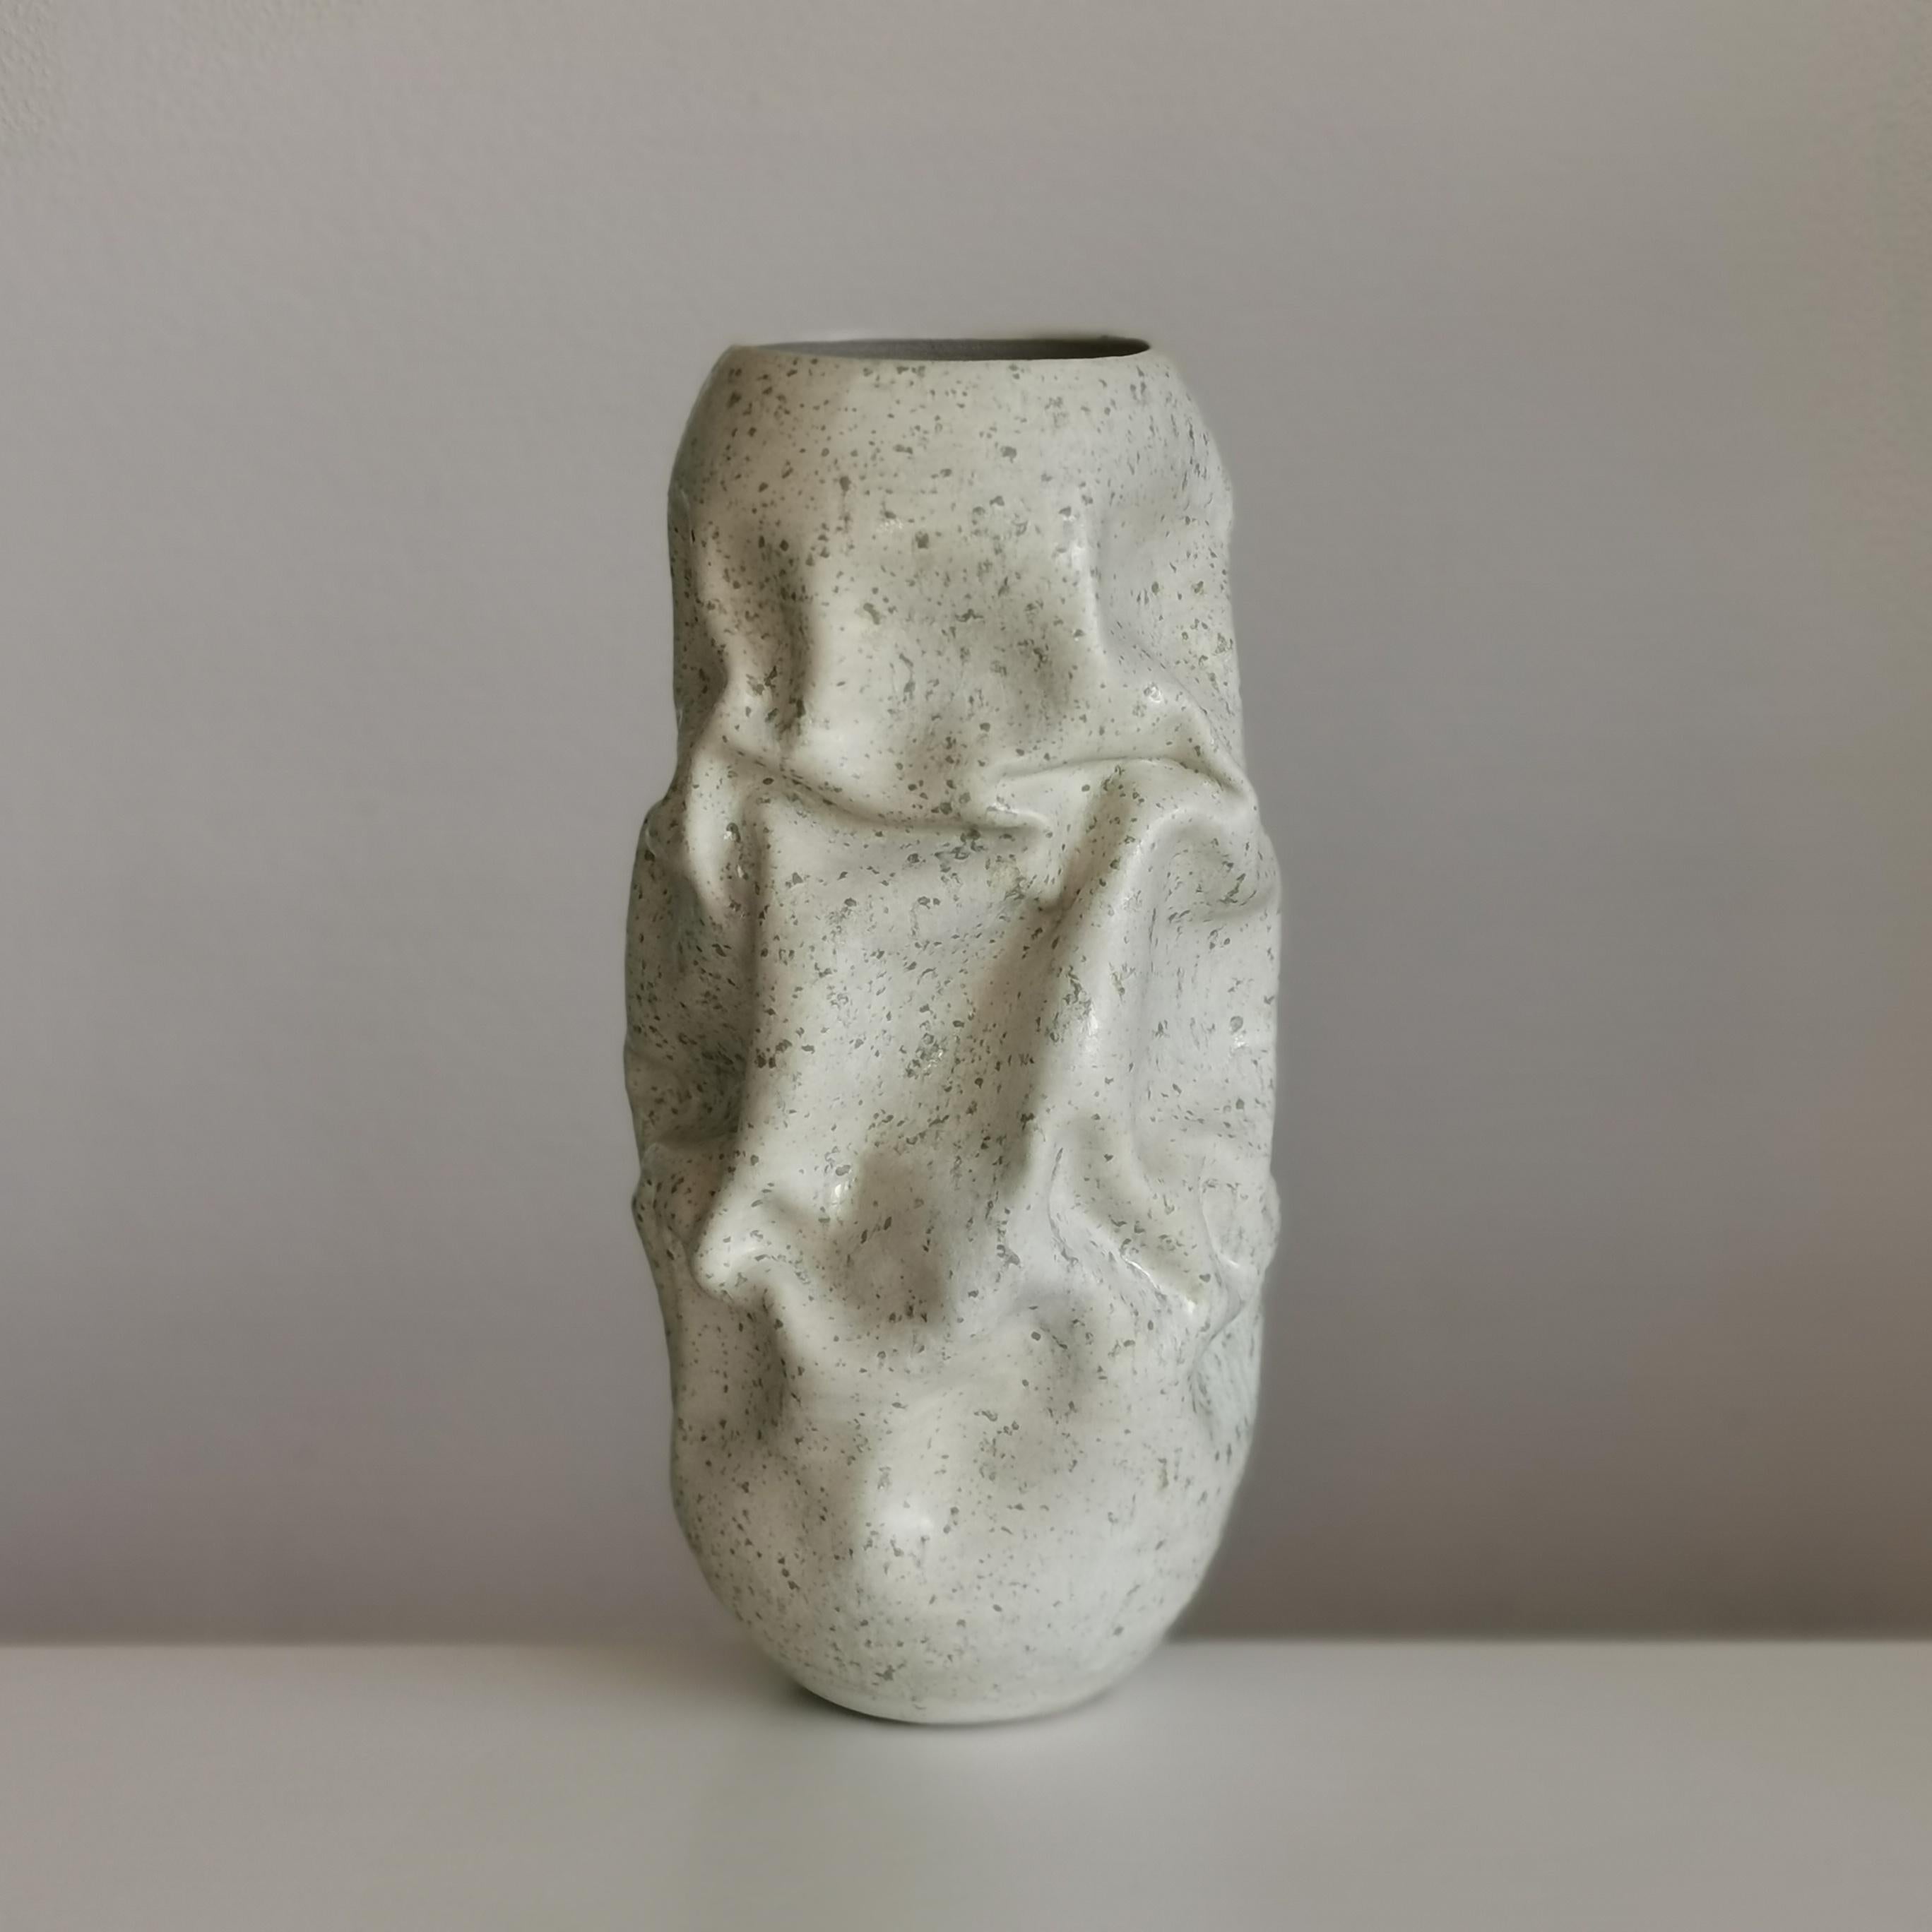 Medium White Crumpled Form, Green Chrystals, Vessel No.128, Ceramic Sculpture For Sale 5